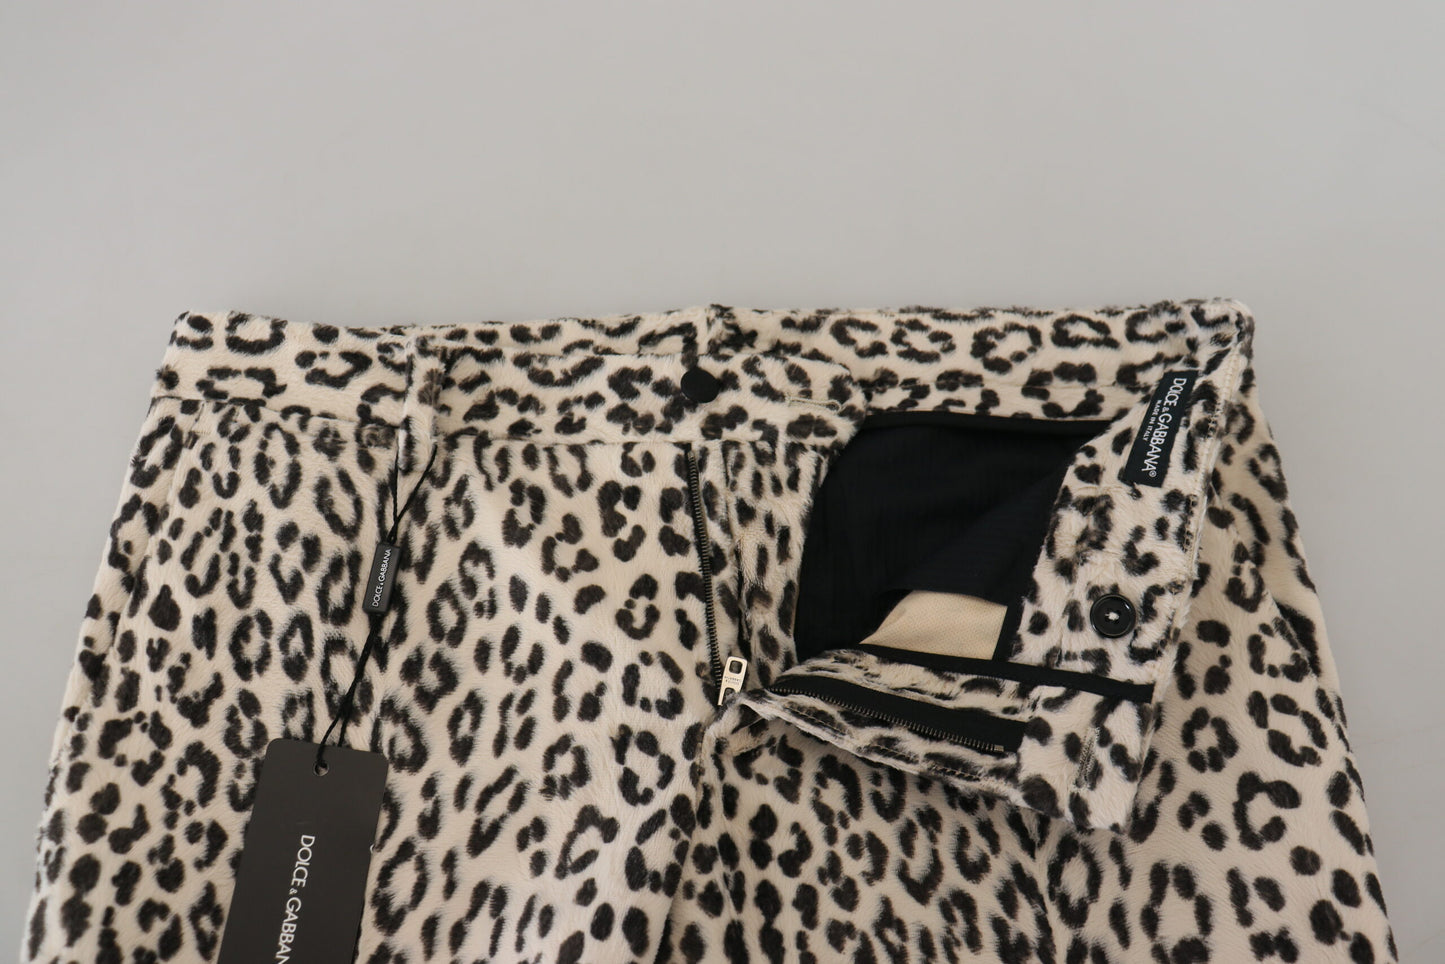 Elegant Beige Leopard Print Pants